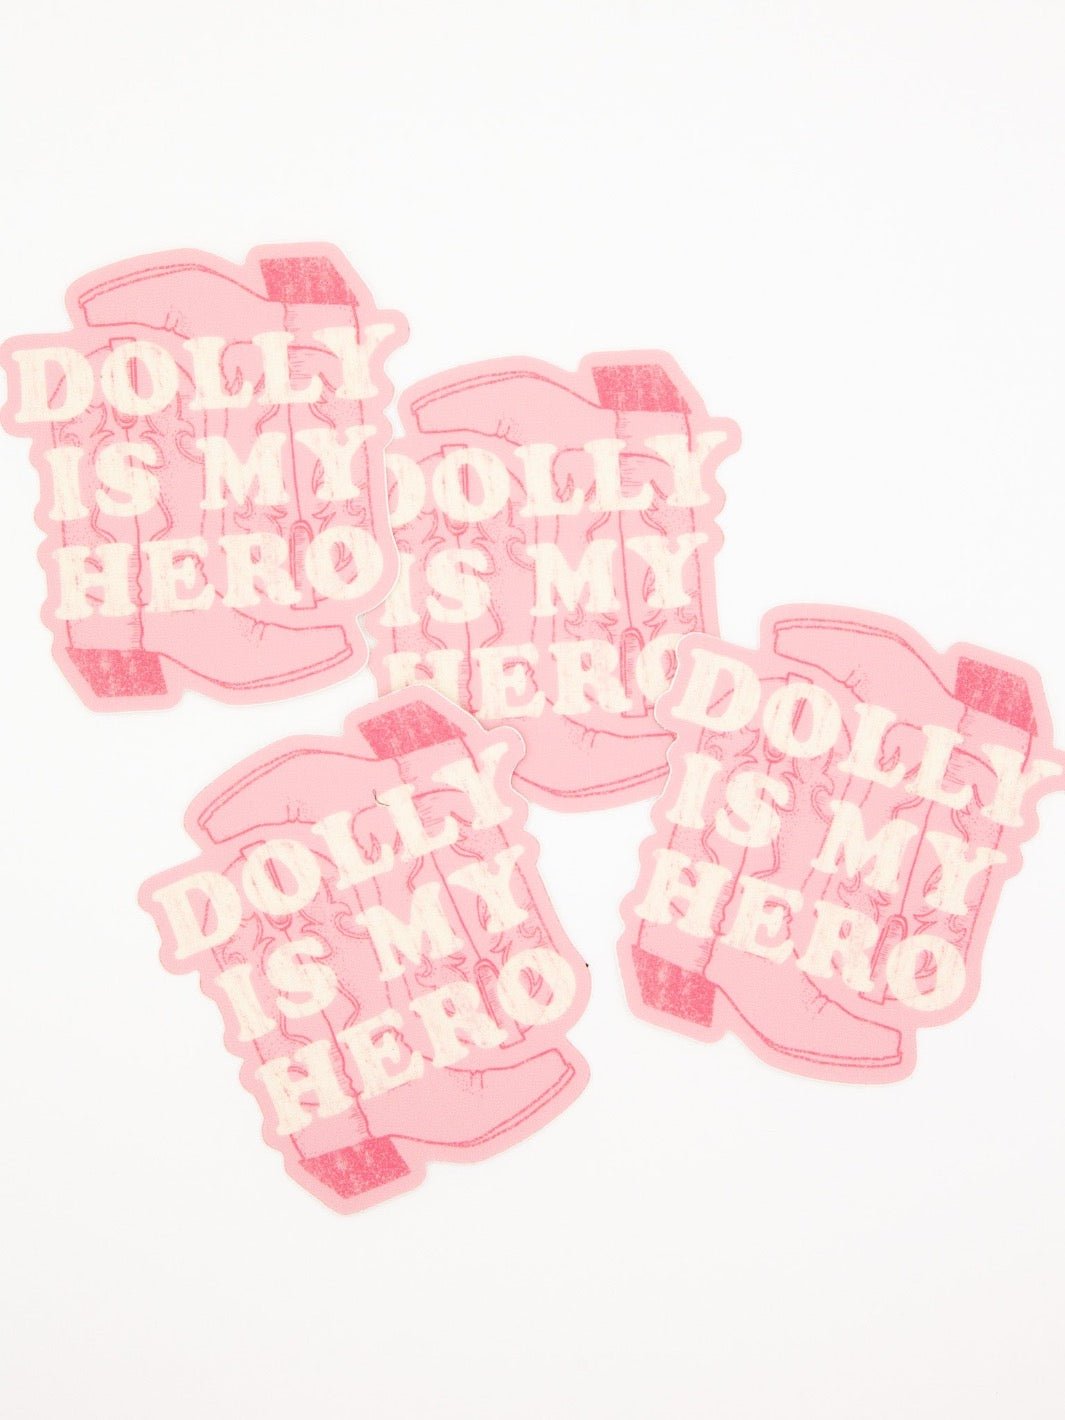 Dolly is My Hero Sticker - Heyday